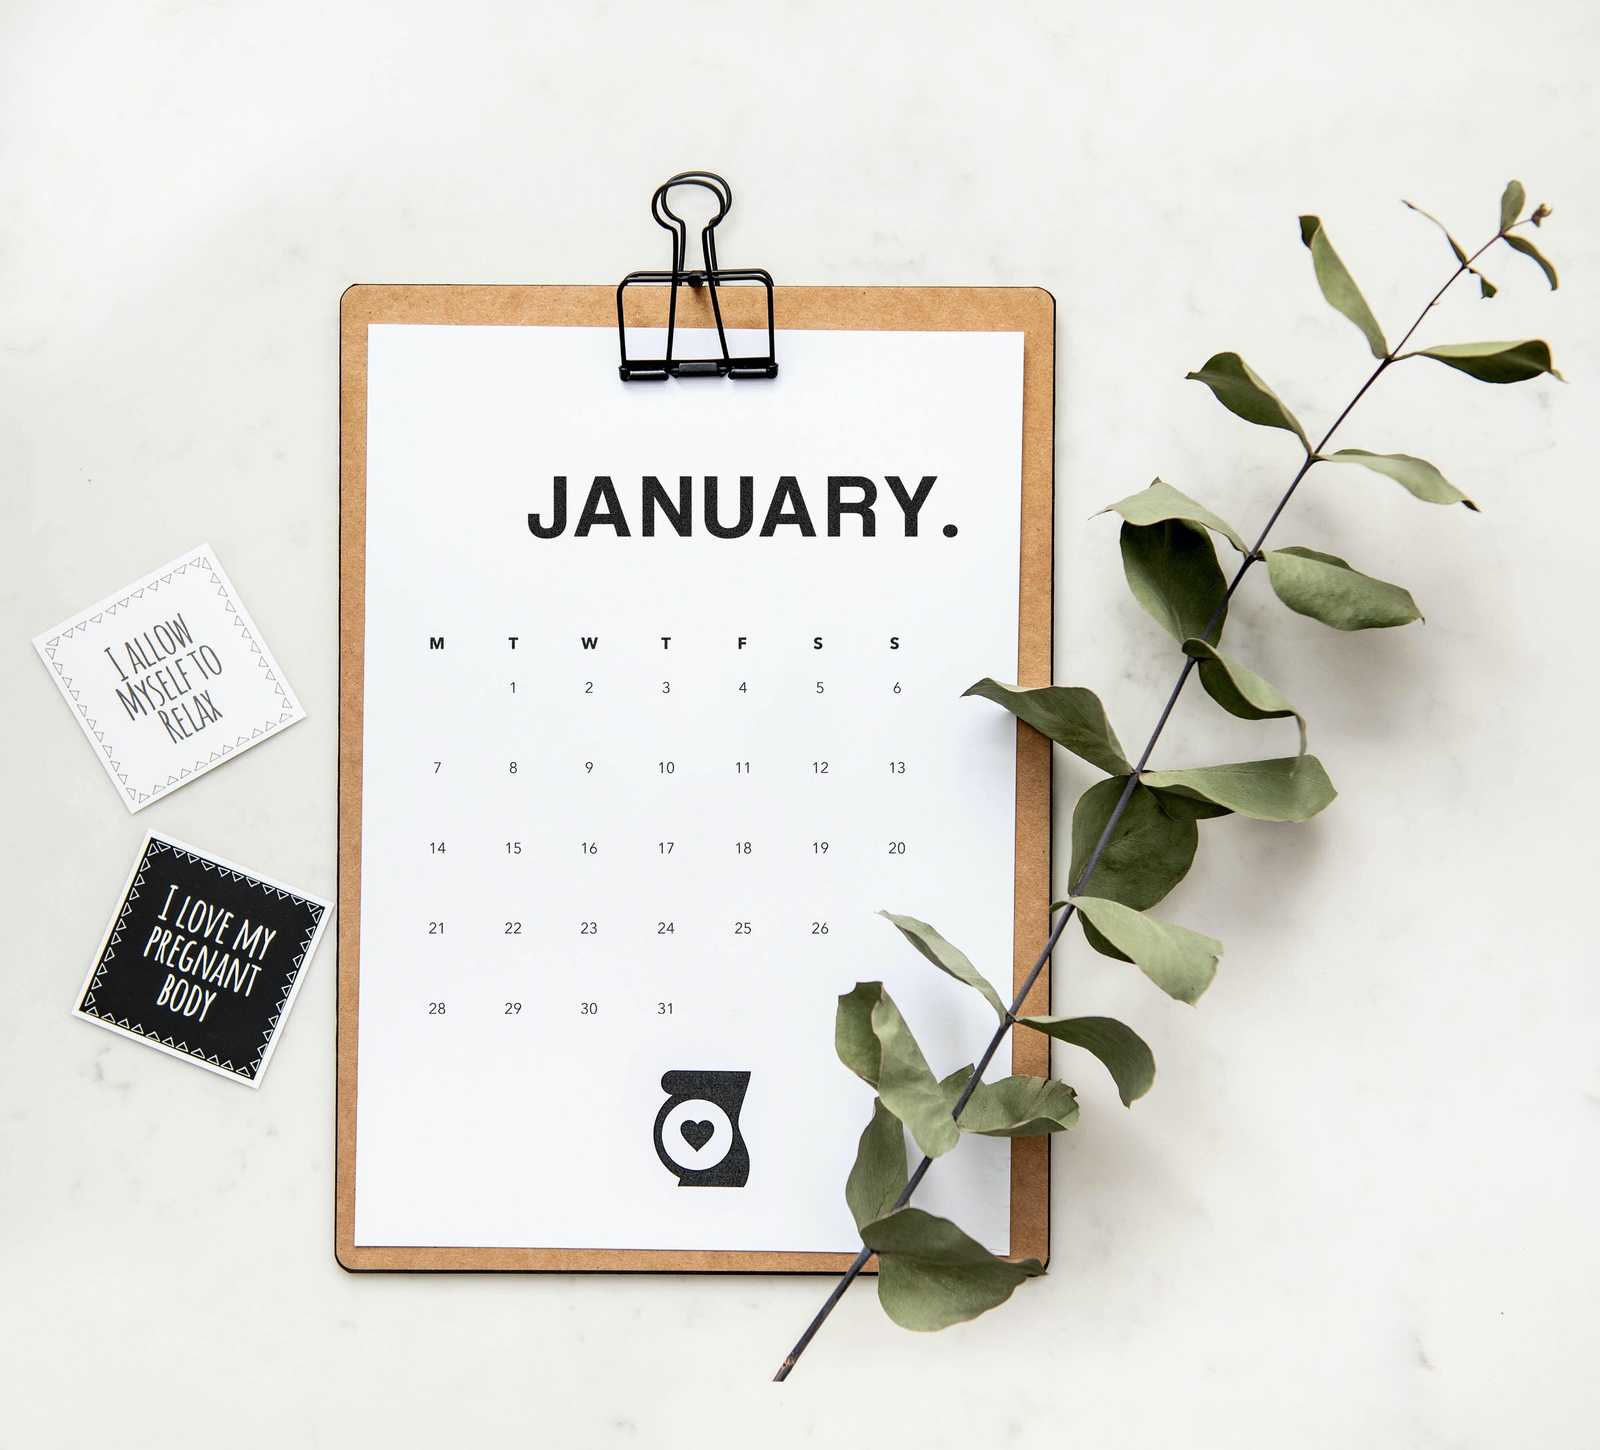 Kitchen Table CEOs Blog 10 Social Media Post Ideas for January - Calendar of January